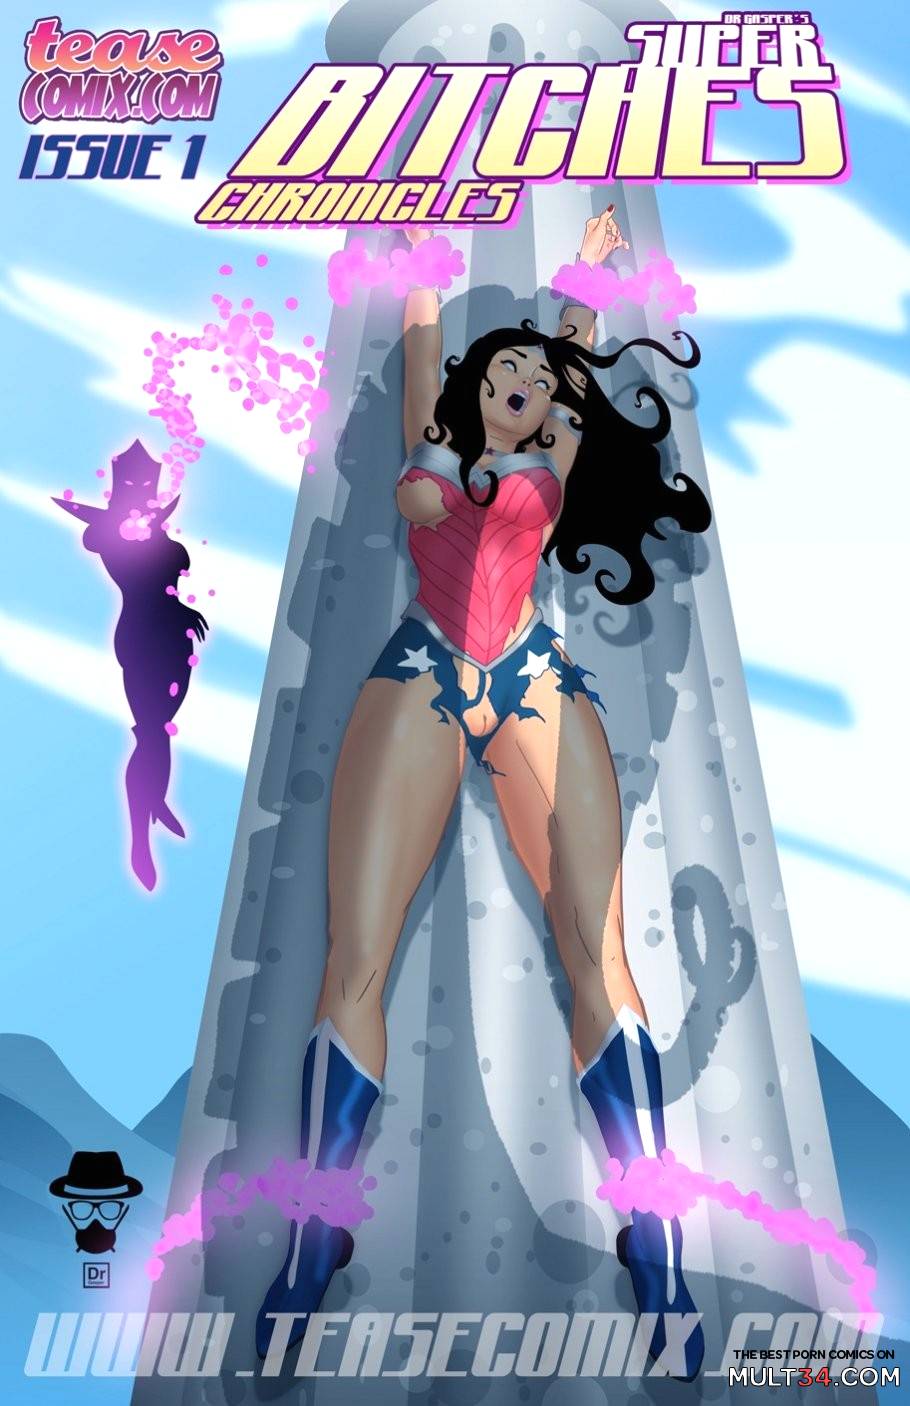 Cartoon Wonder Woman Porn - Super Bitches porn comic - the best cartoon porn comics, Rule 34 | MULT34